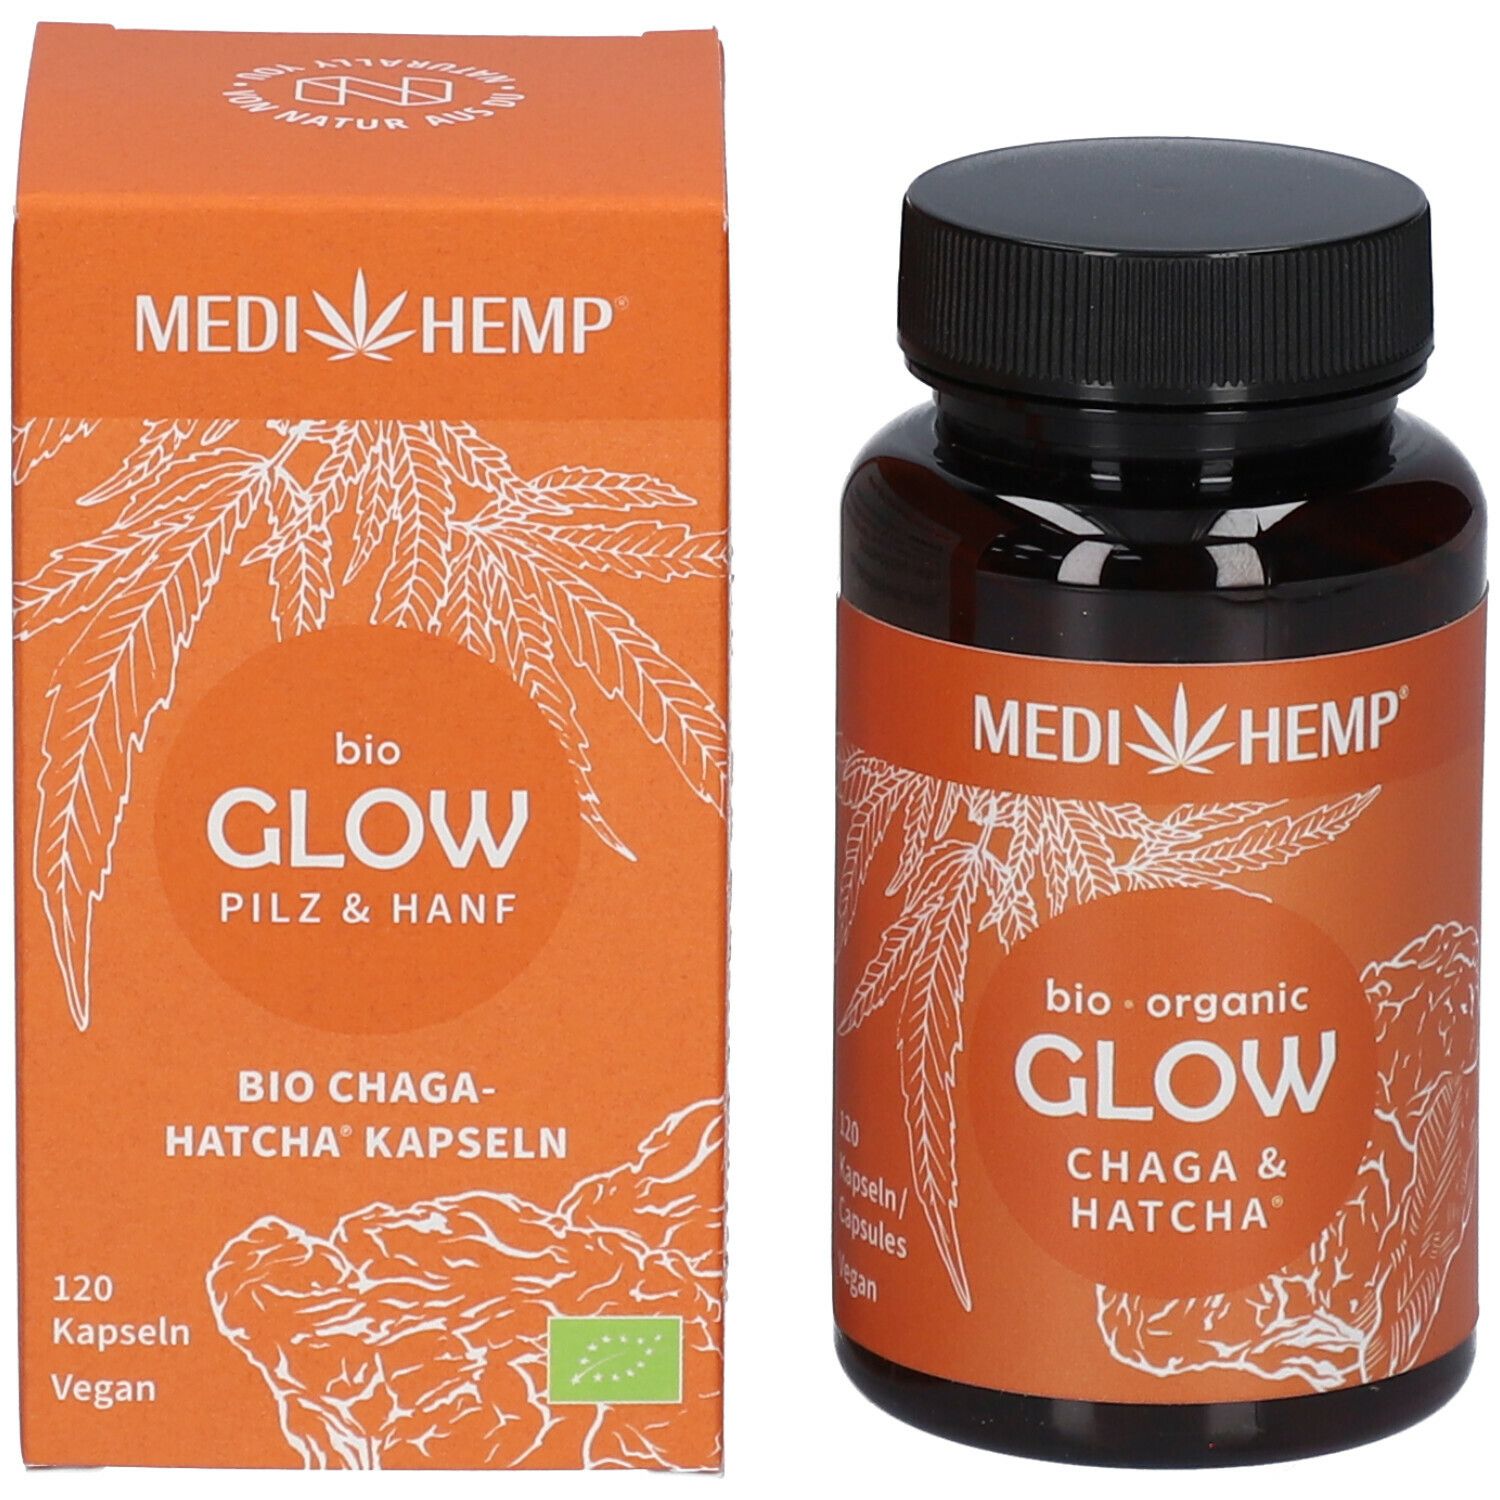 MEDIHEMP Bio Glow Chaga Hatcha® Kapseln